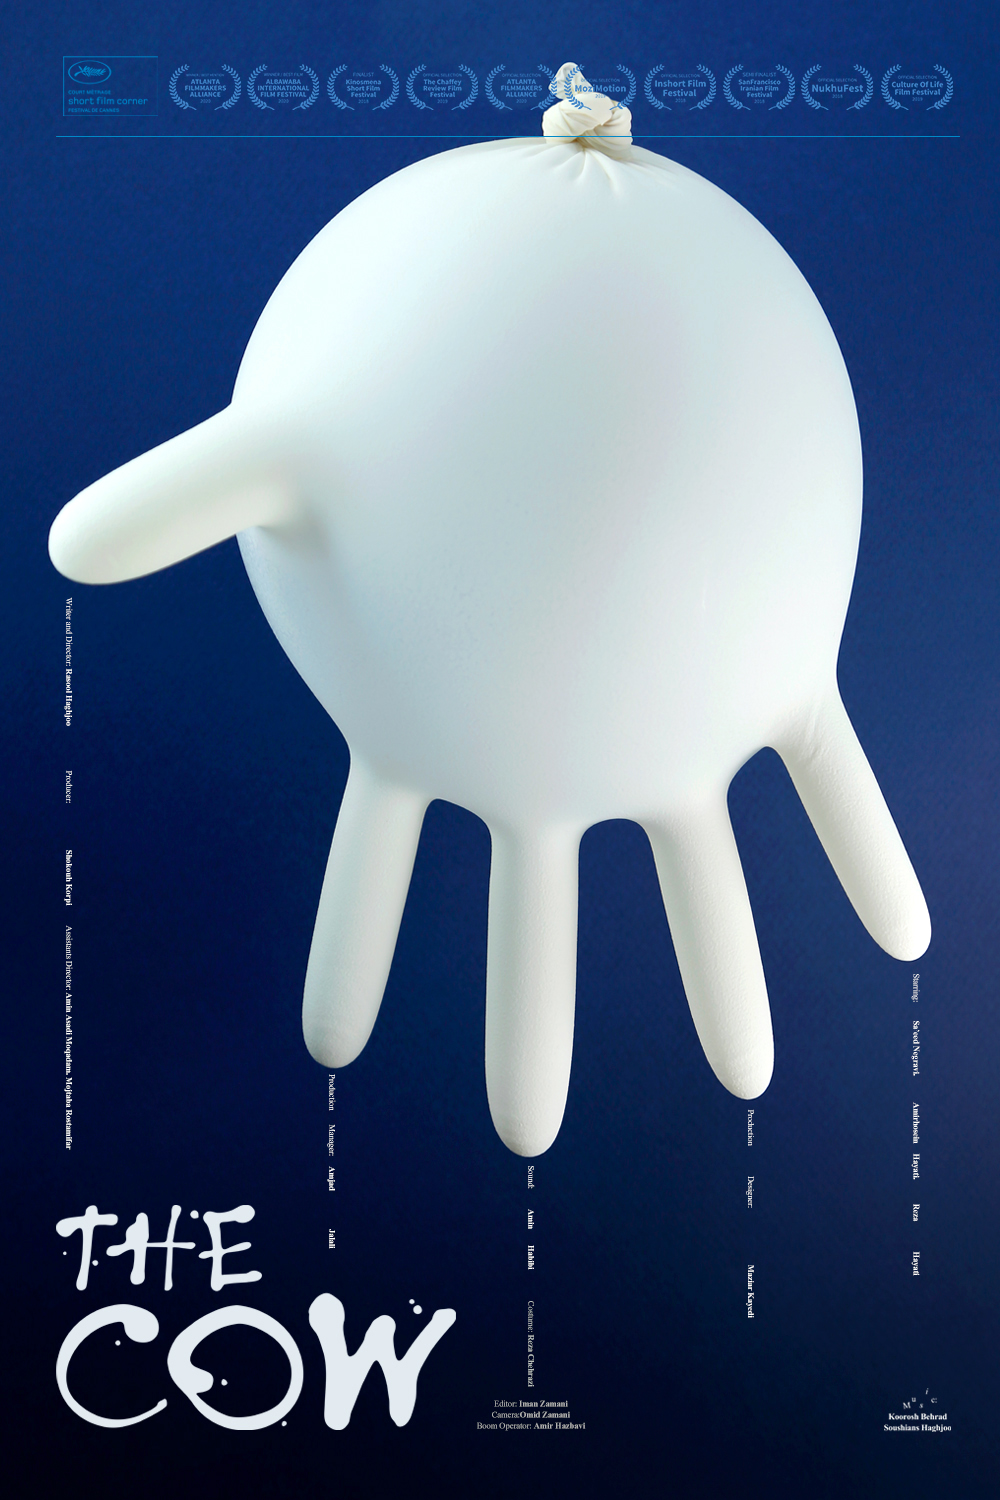 rasool-haghjoo-the-cow-short-film-poster